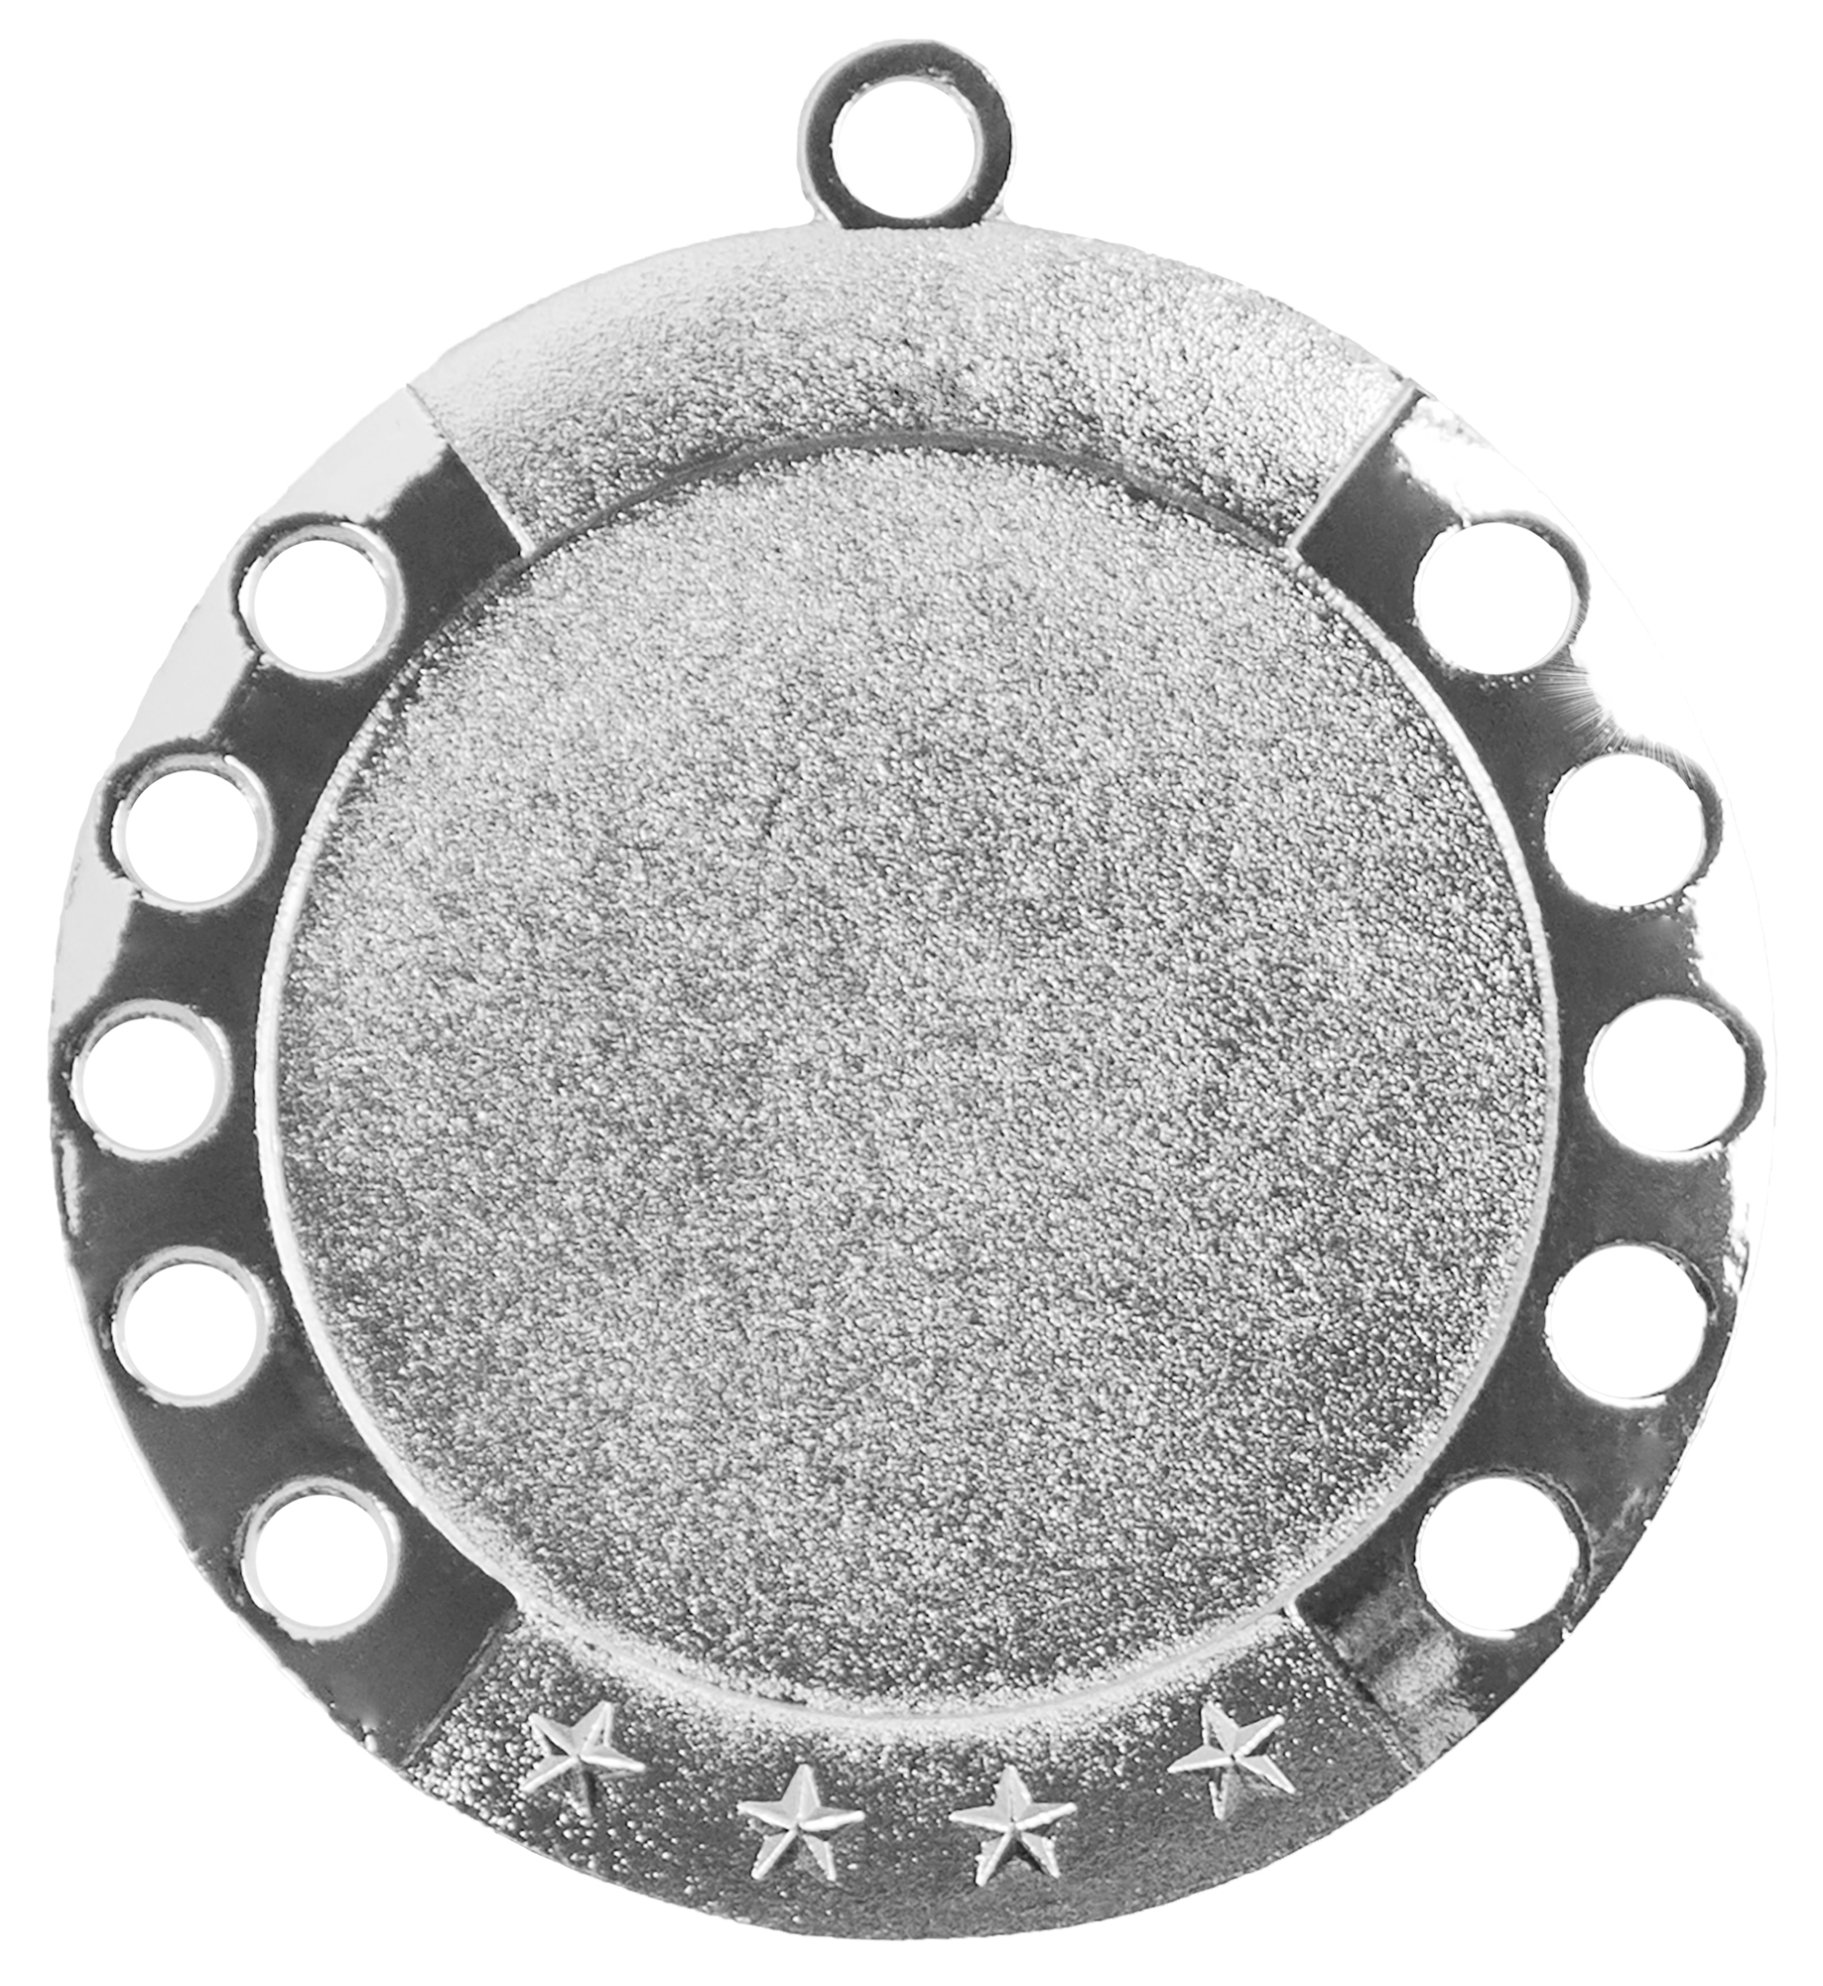 Zamak  Medaille70mm Lieferbar in Gold-Silber - Bronze